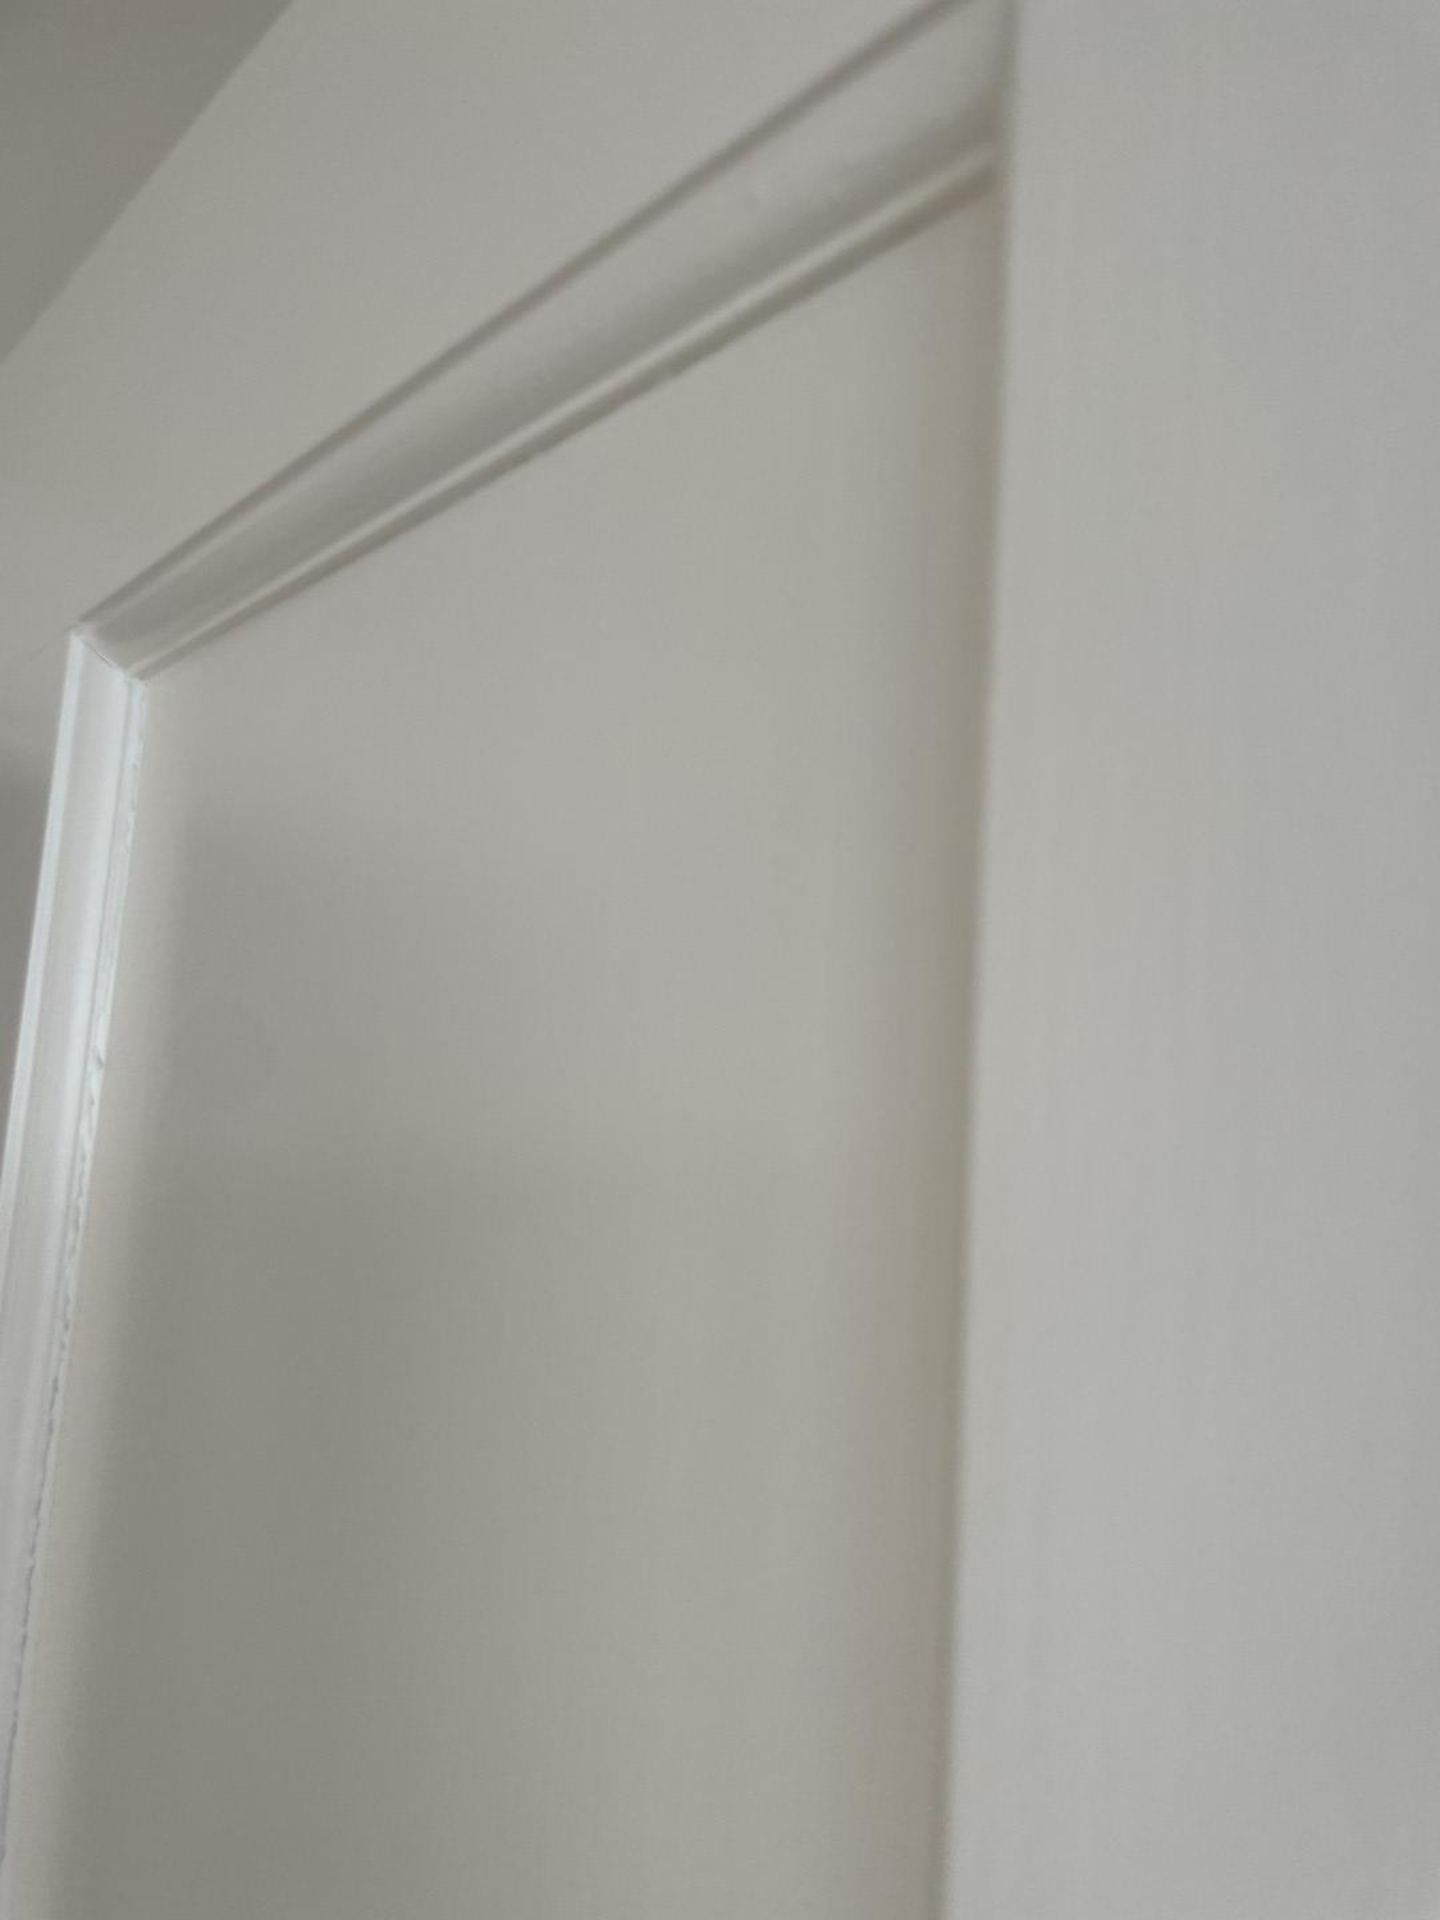 1 x Solid Wood Lockable Painted Internal Door in White - Image 3 of 11